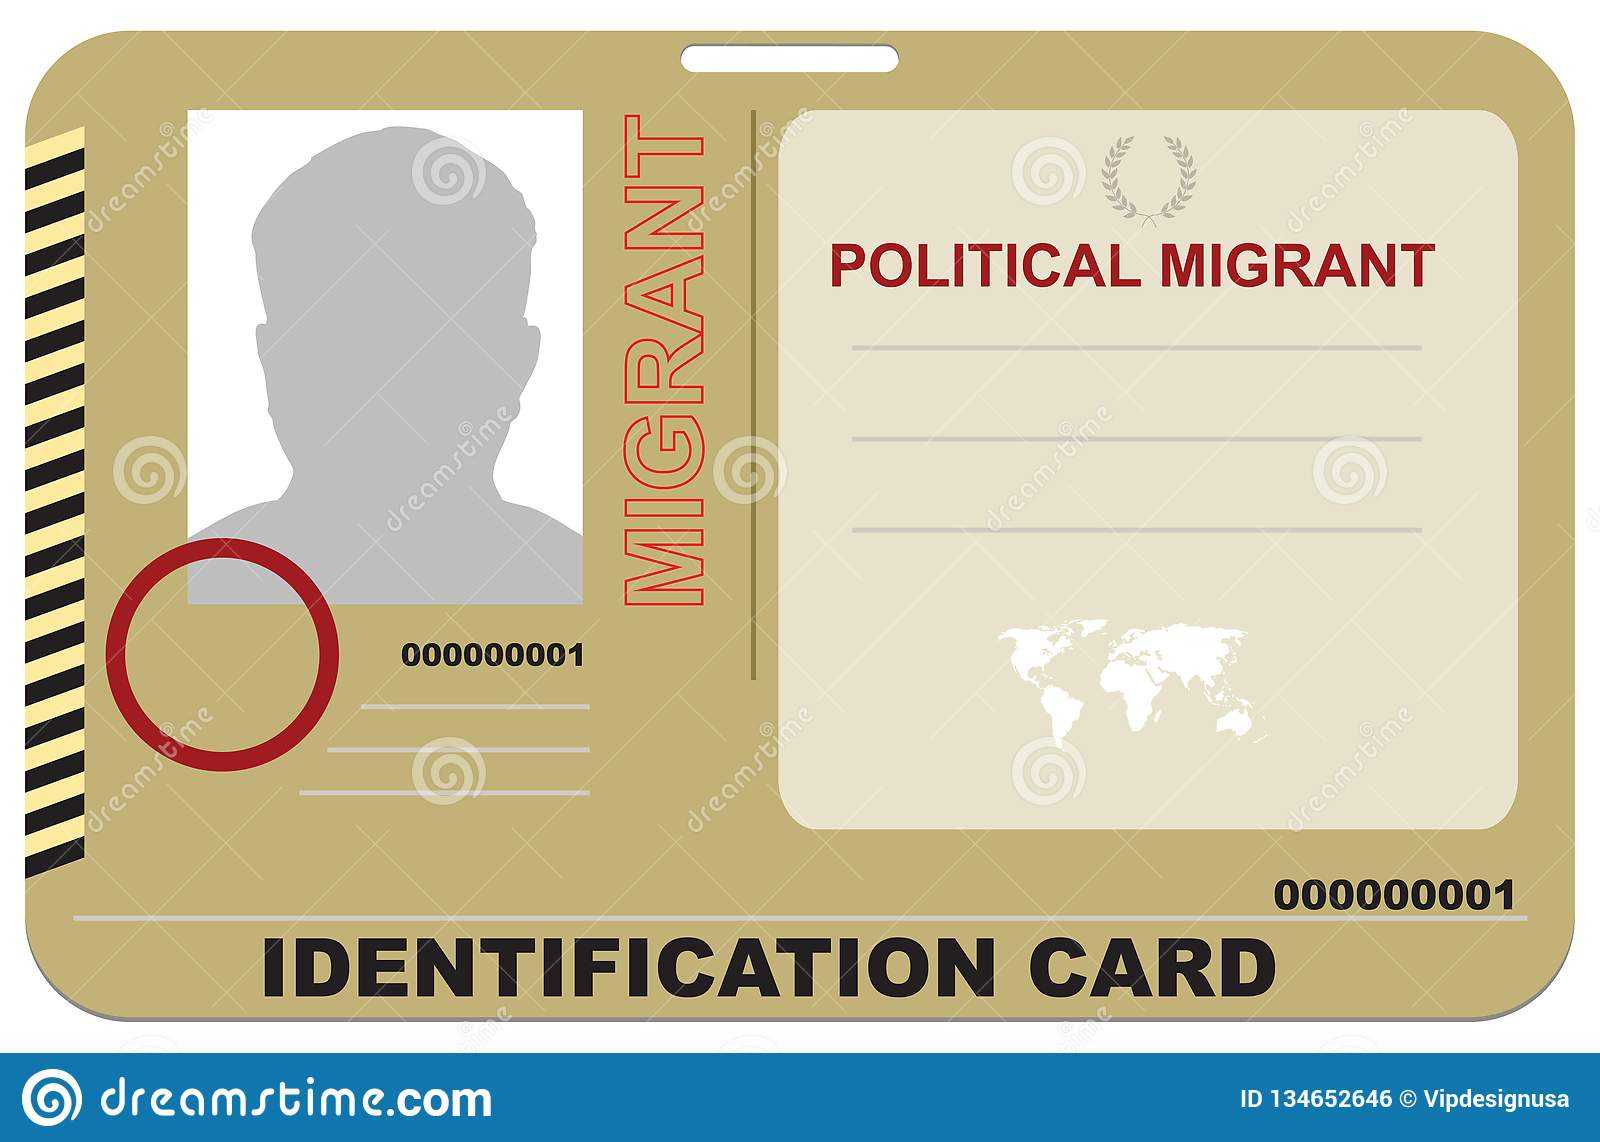 Identification Card Political Migrant Stock Vector In Mi6 Id Card Template